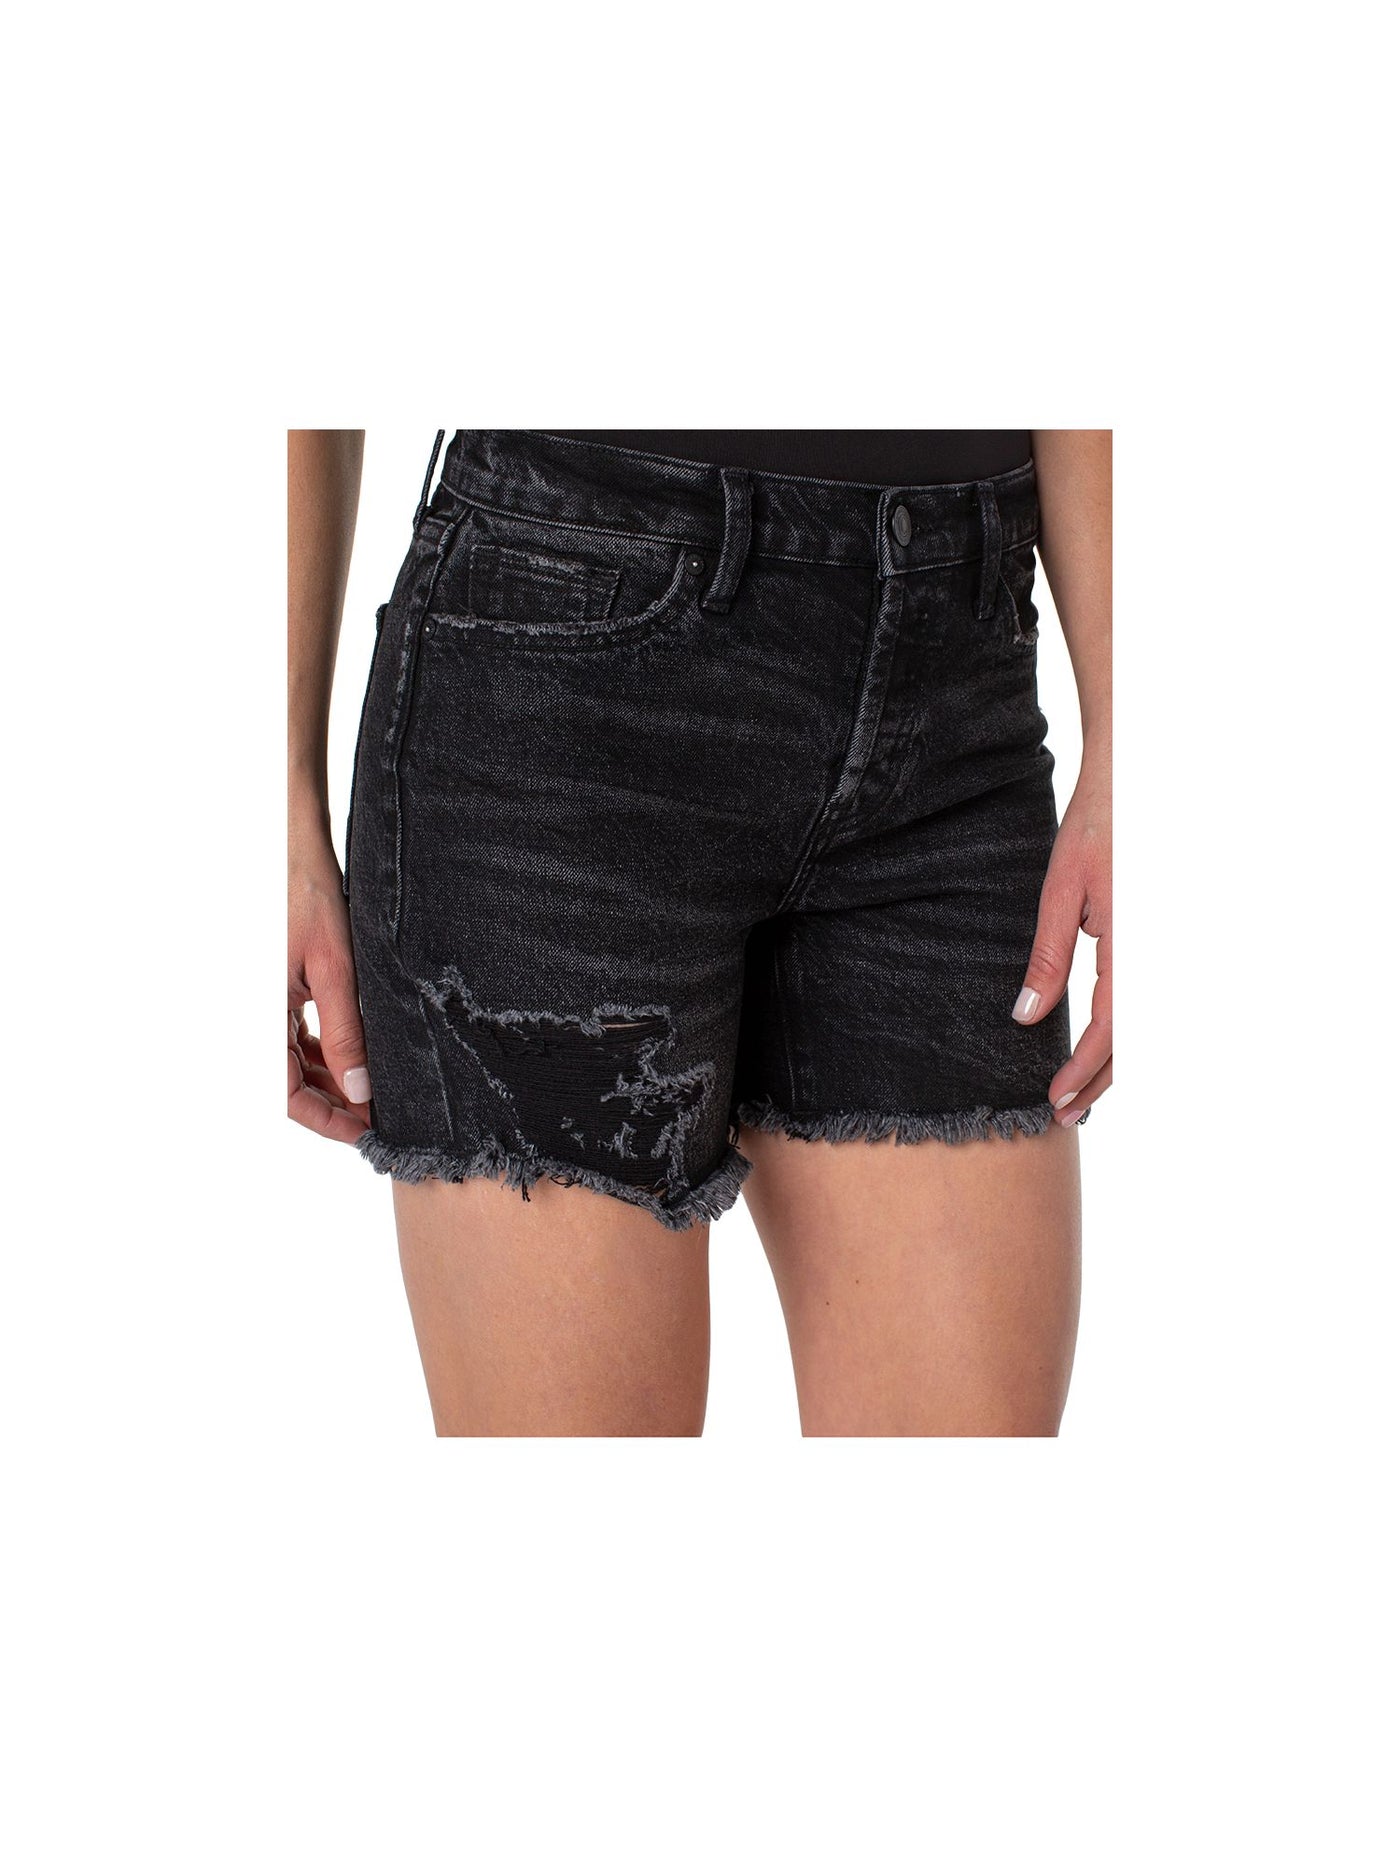 EARNEST SEWN NEW YORK Womens Black Denim Zippered Pocketed Frayed Hem Button Fly Distressed Shorts Shorts 24